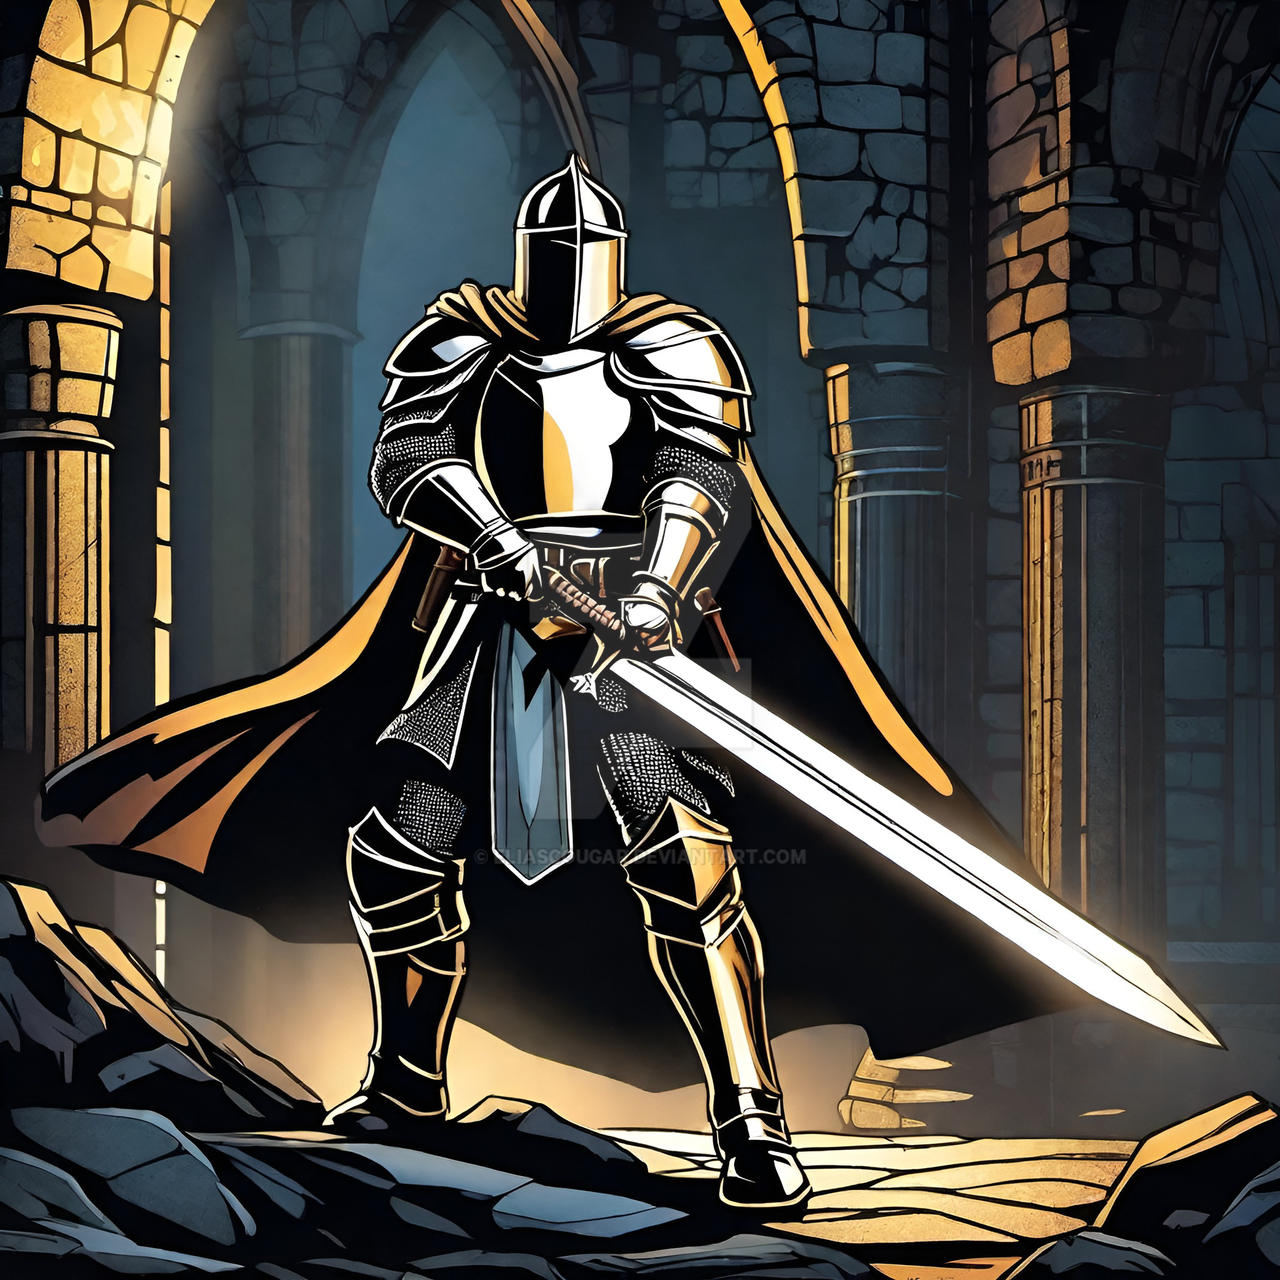 Classic Heroic Knight by EliasCougar on DeviantArt